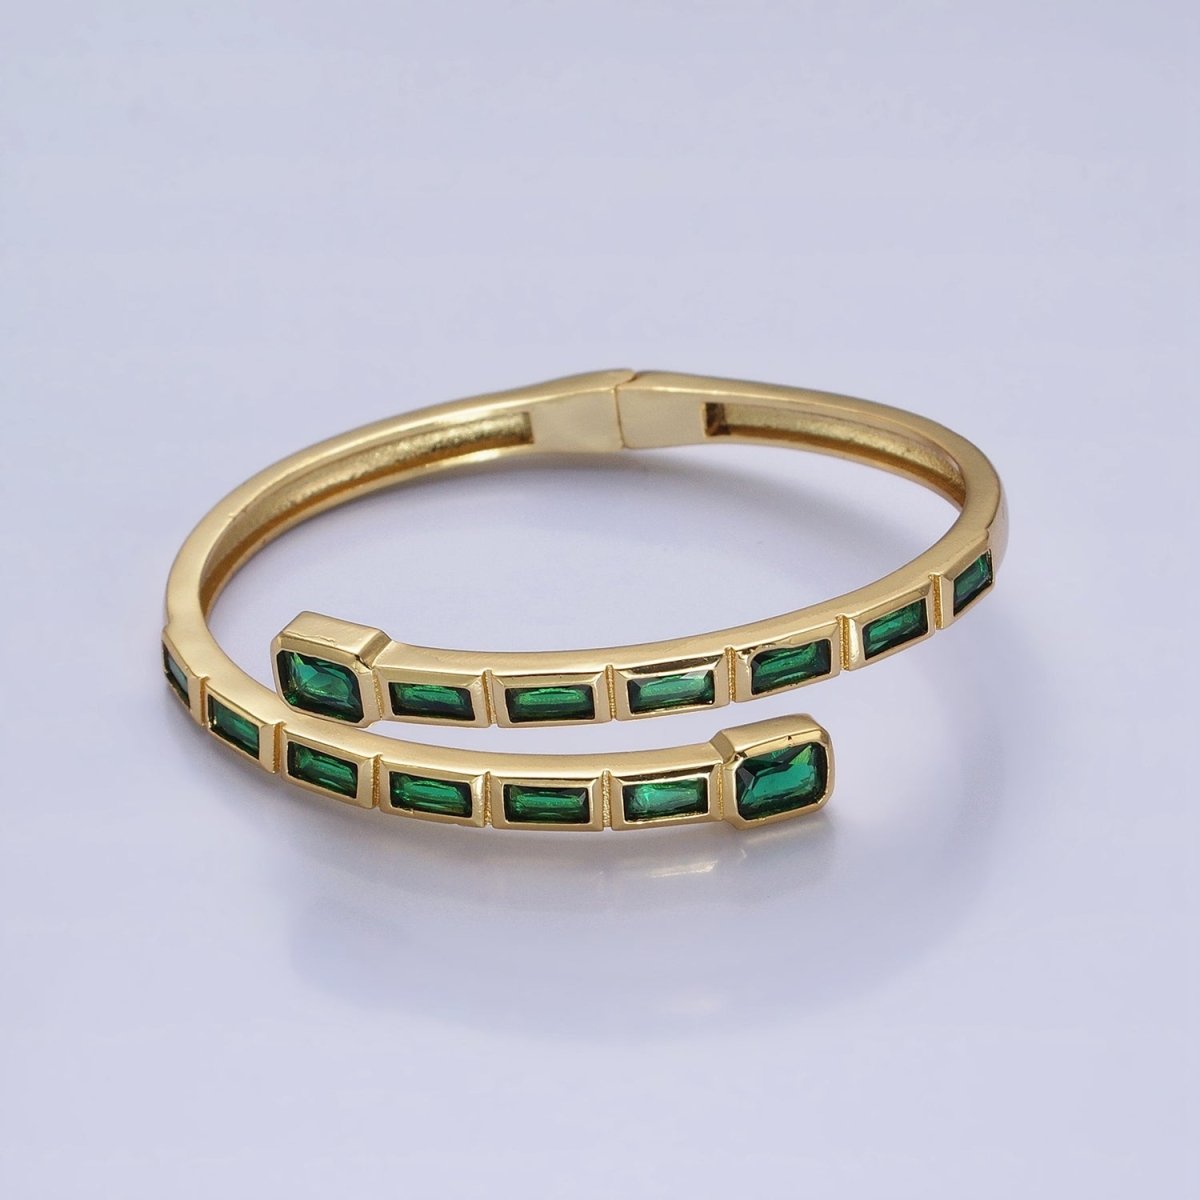 Gold Wrist Bangle Emerald Cut Cz Bangle Bracelet Silver Bracelet Blue Sapphire, Emerald Green, Clear CZ | WA-1687 to WA-1691 Clearance Pricing - DLUXCA